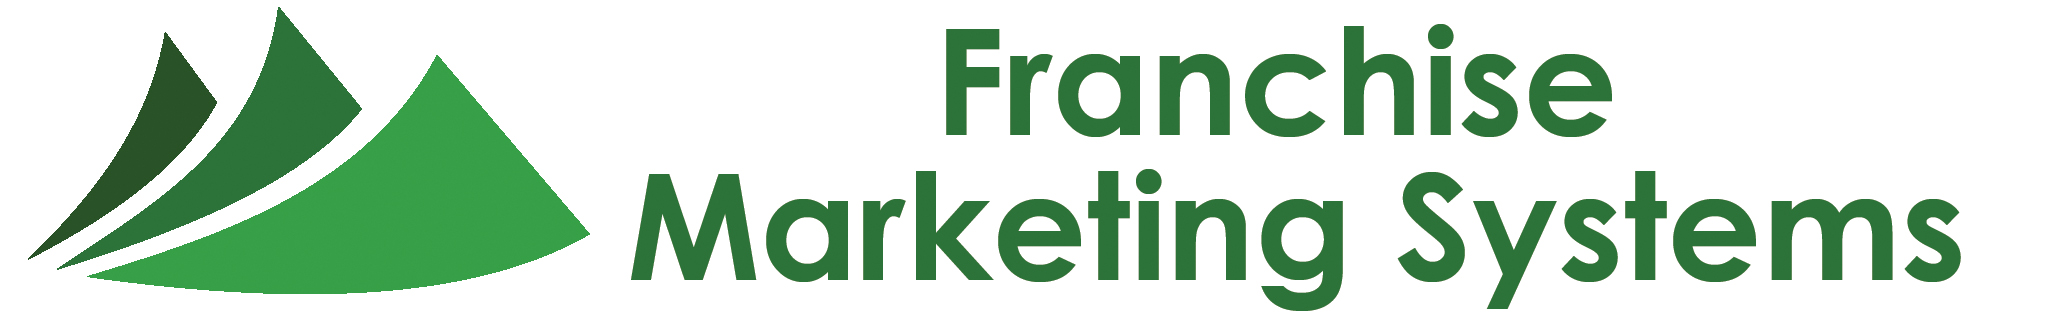 Logo for Franchise Marketing Systems'